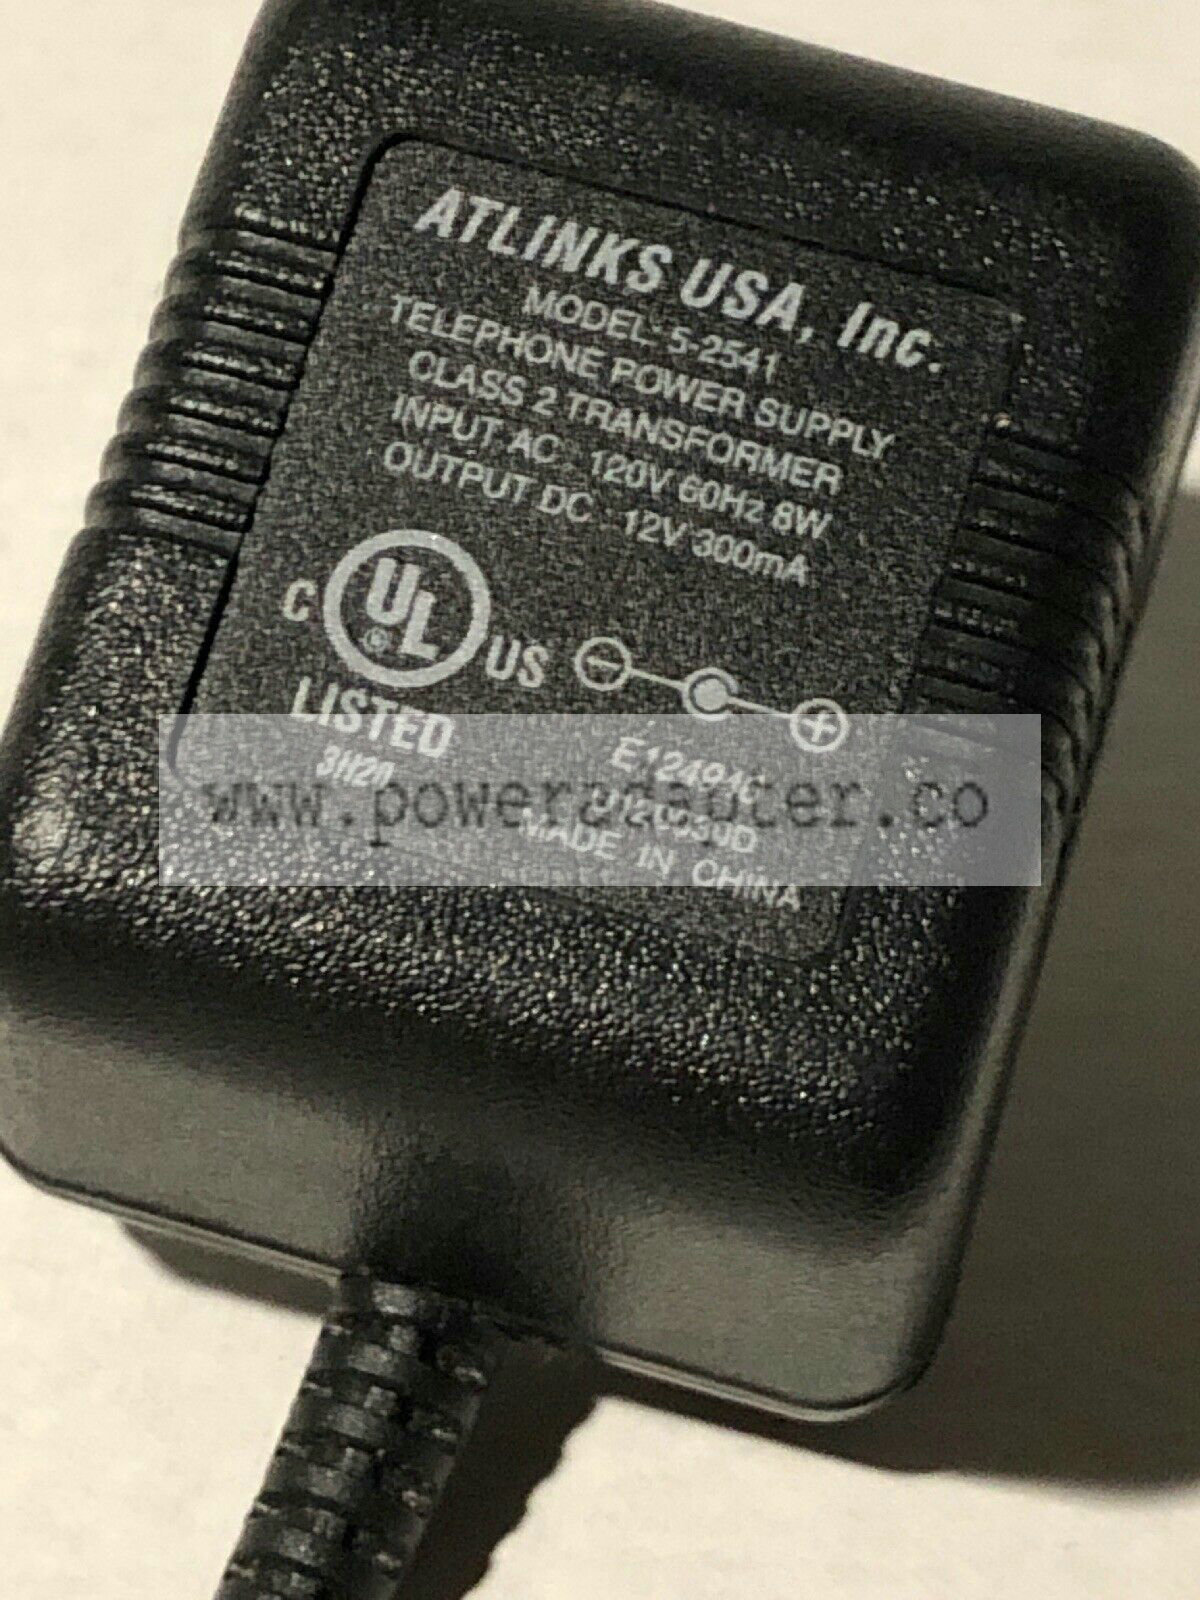 Atlinks USA 5-2541 Telephone Power Supply DC 12V 300mA Class 2 Transformer Product Type: Transformer Output Voltage: